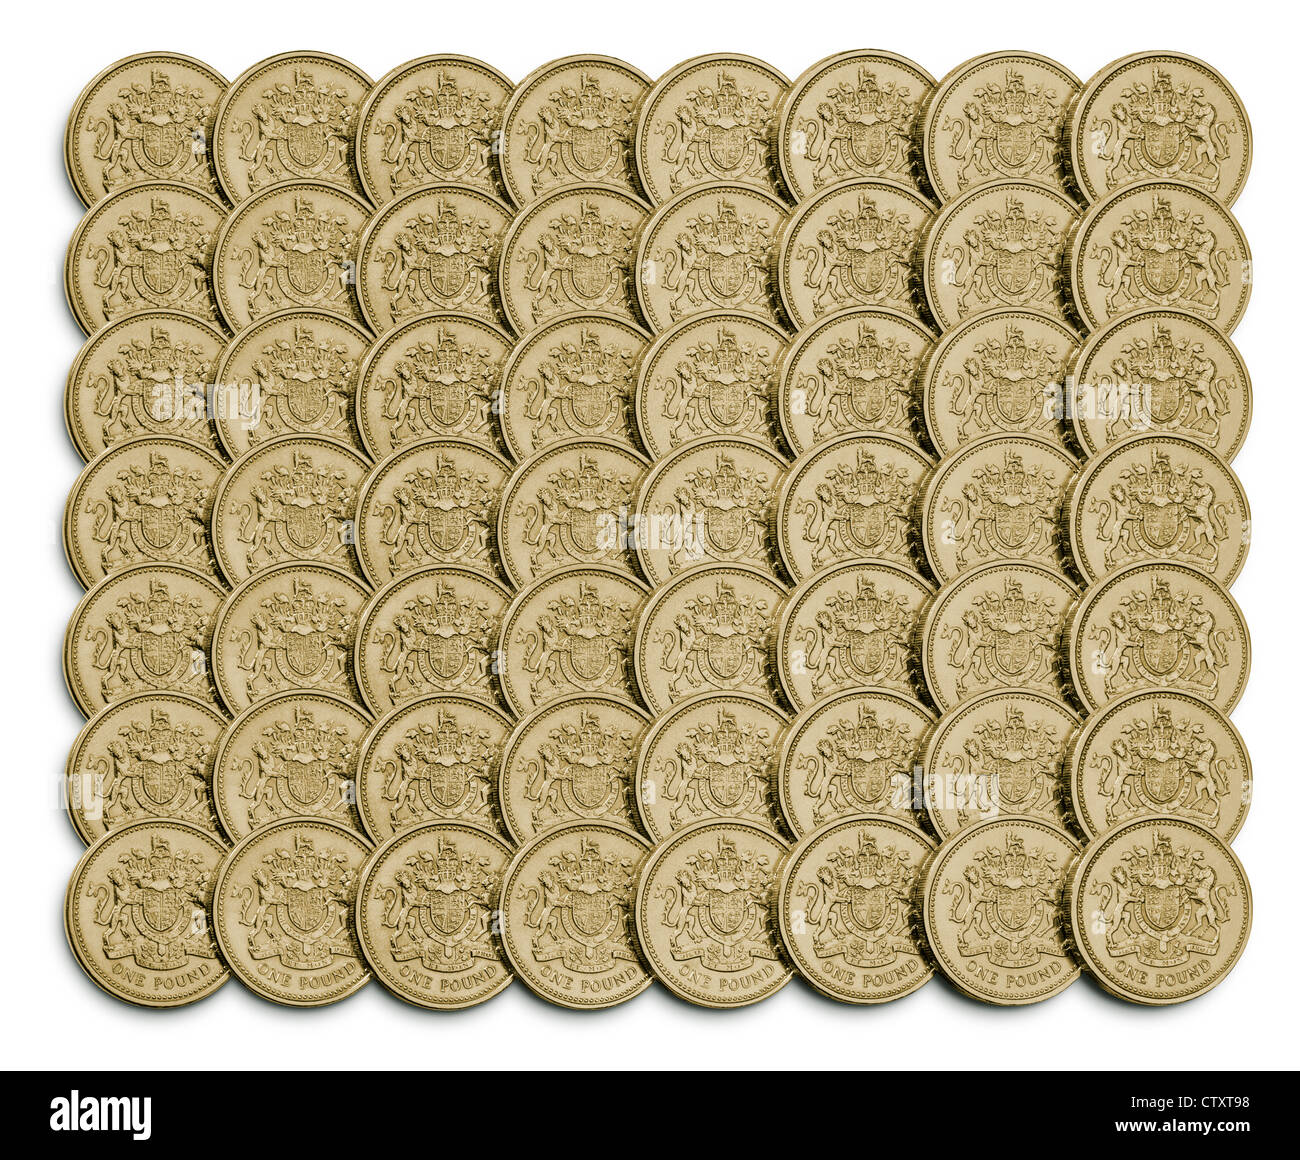 Regimented arrangement of old British Pound coins. Stock Photo